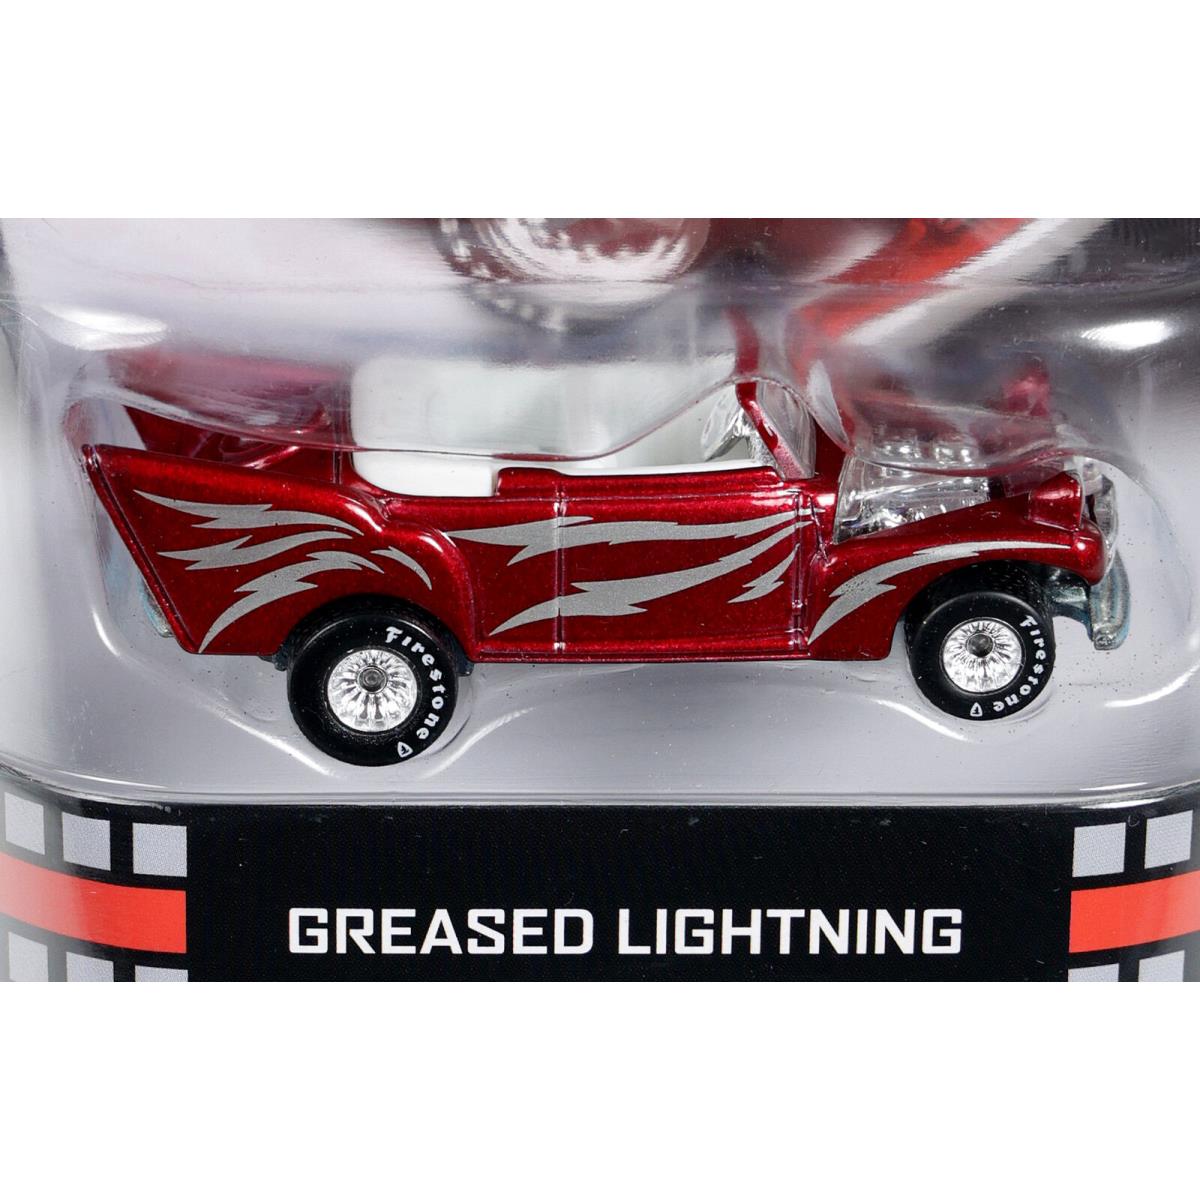 Hot Wheels Greased Lightning Retro Entertainment Series X8902 Nrfp 2013 Red 1:64